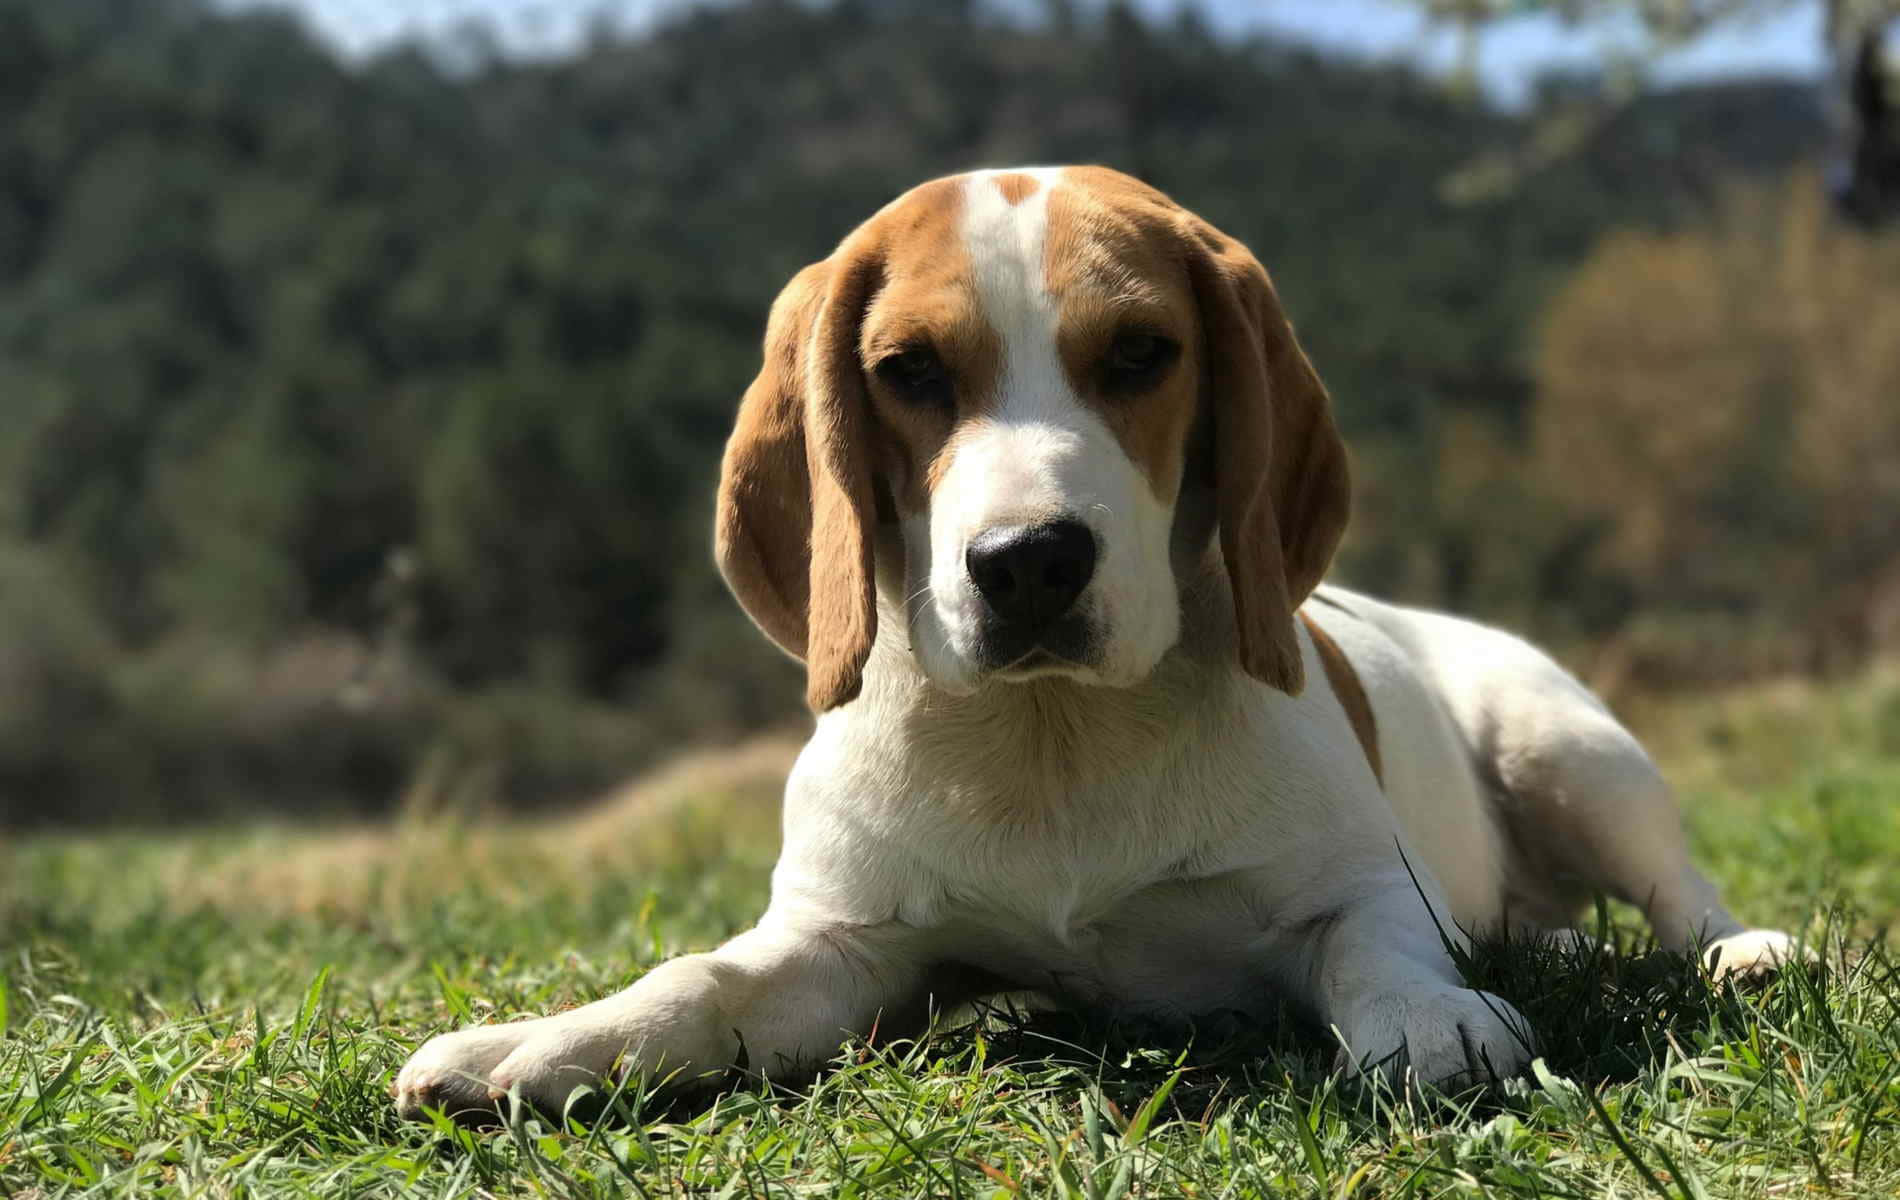 Beagle - the canine bundle of love